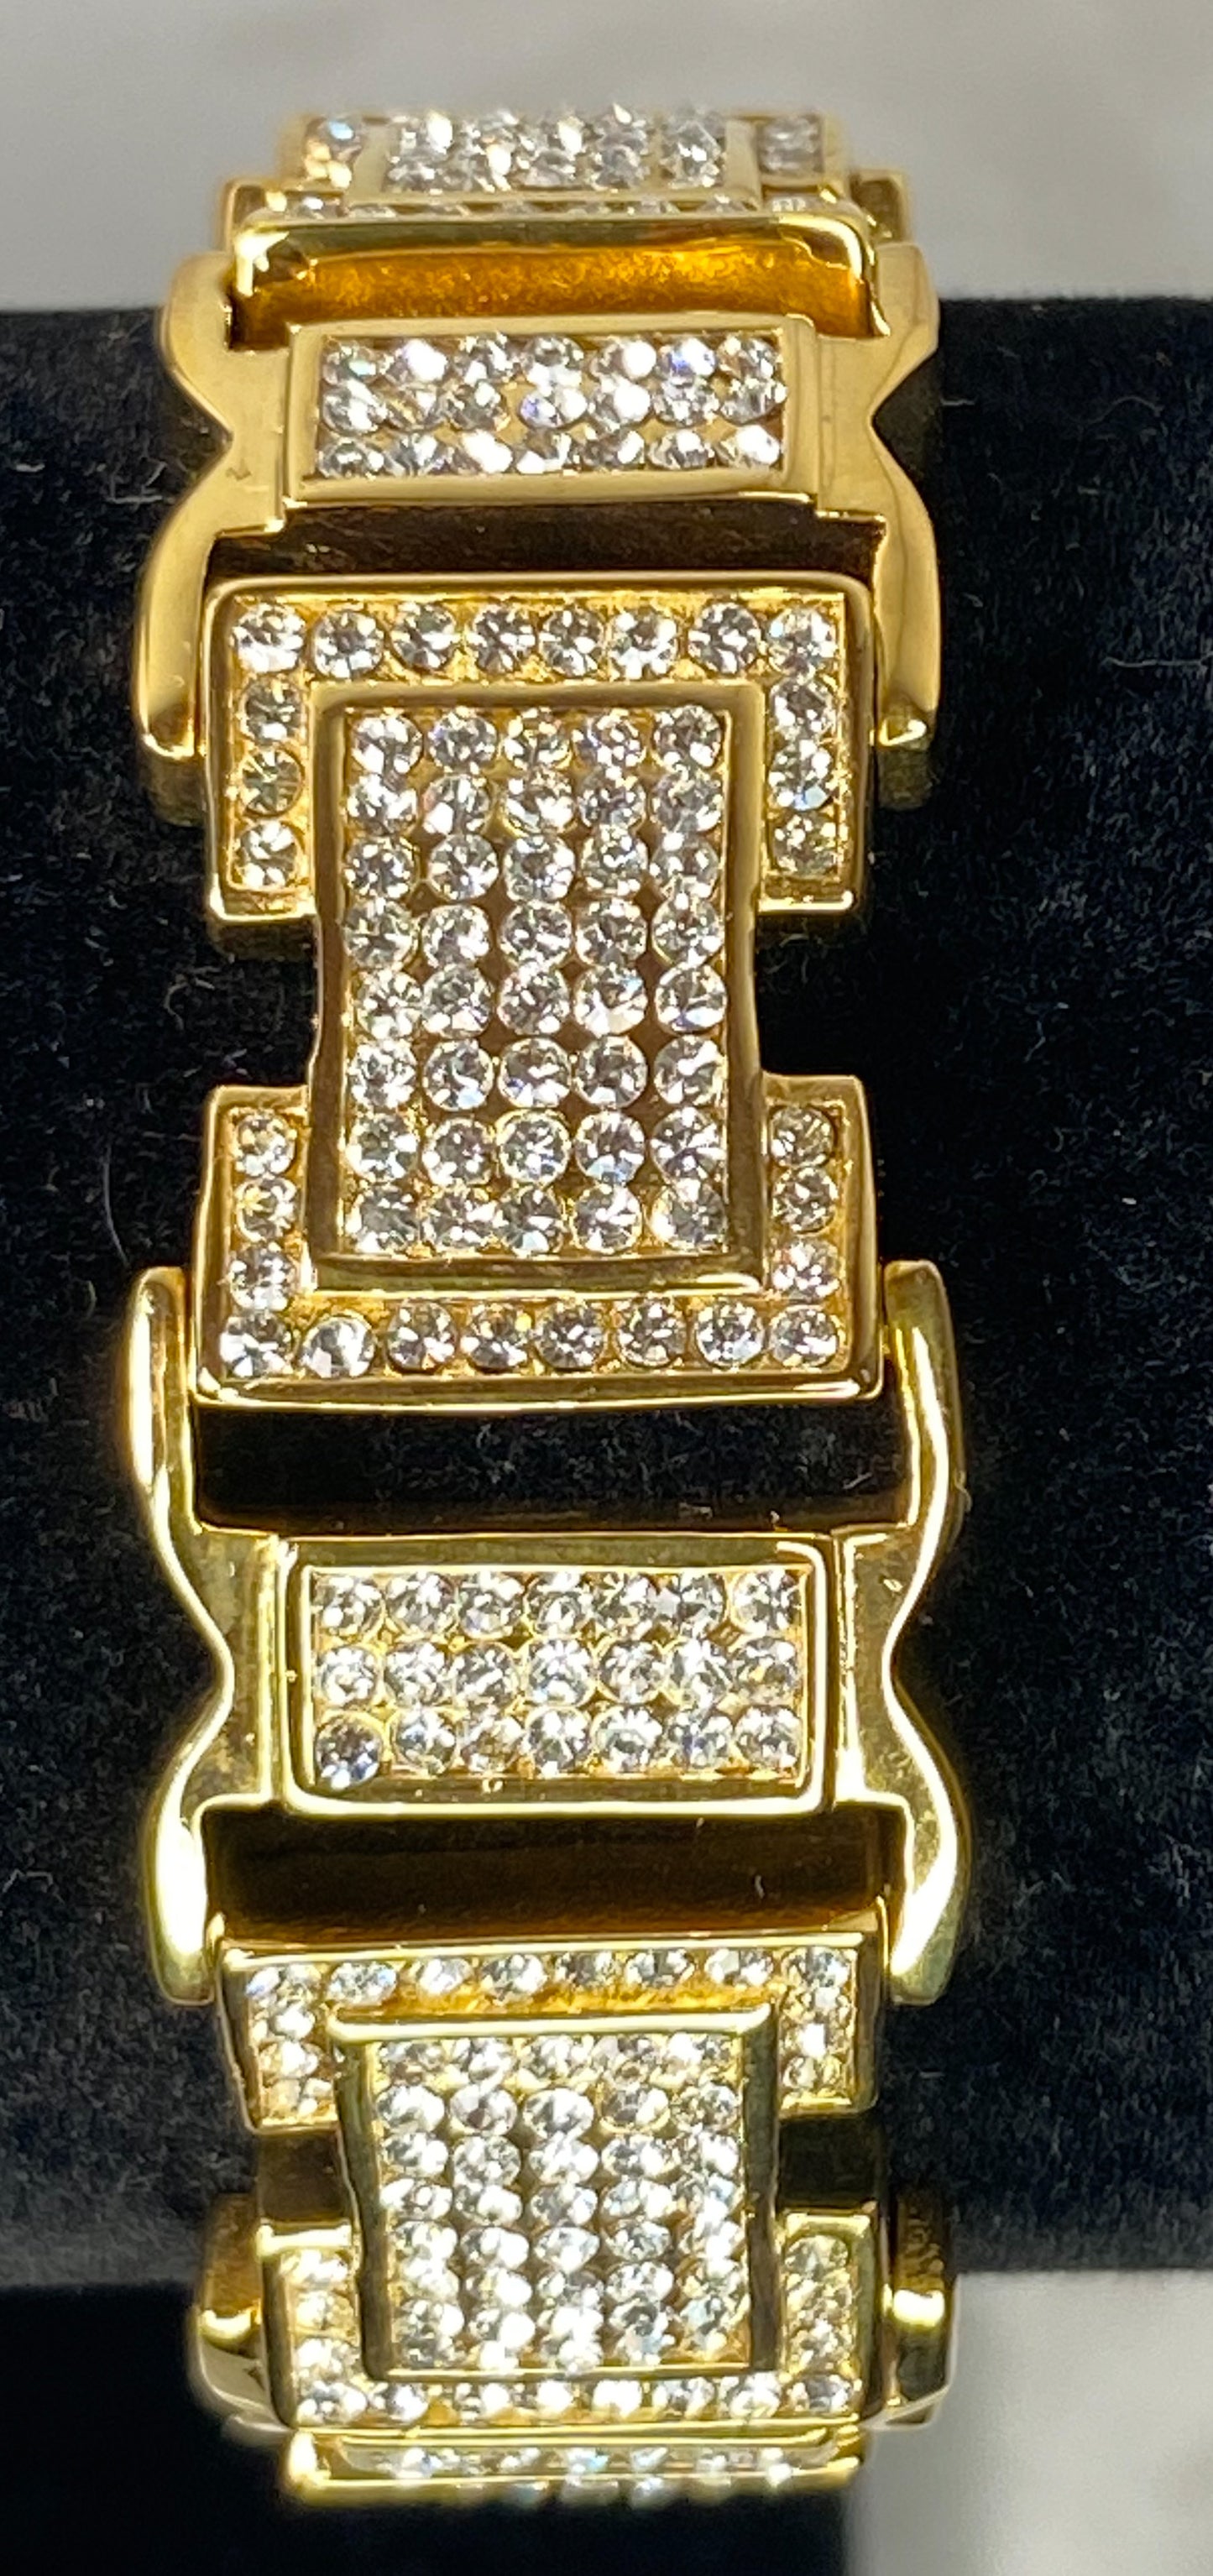 Men’s Gold-Plated Bracelet with Bling